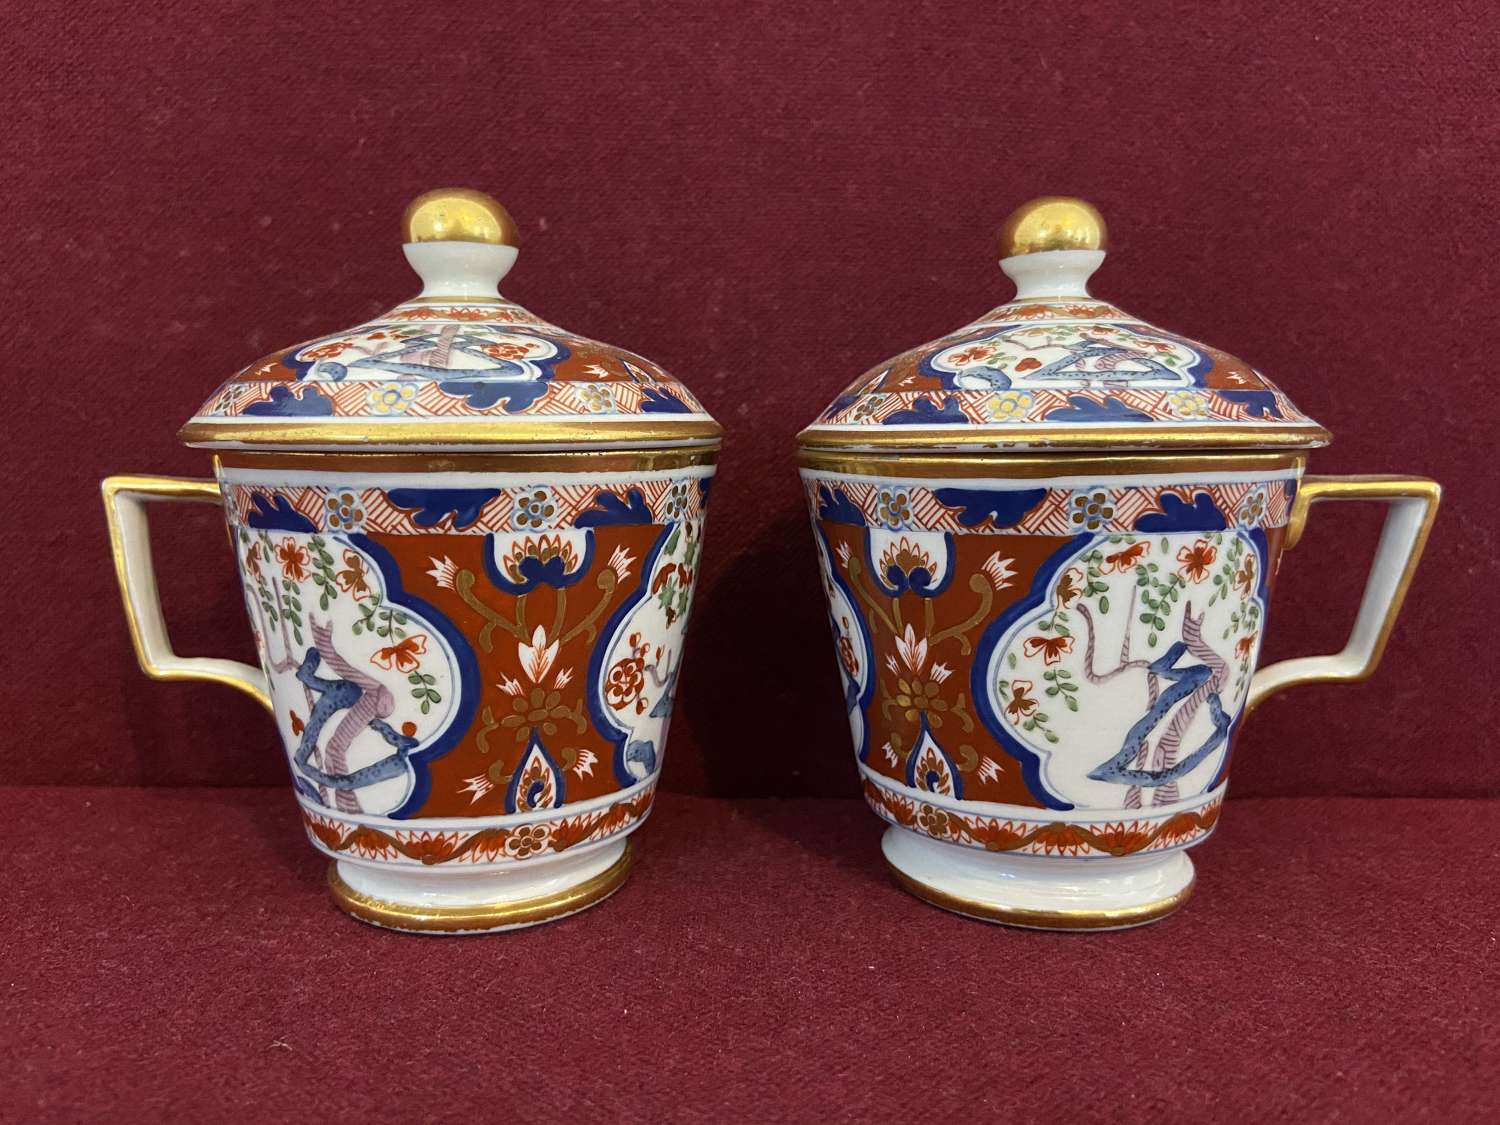 A rare pair of Coalport Porcelain Custard Cups c.1800-1810